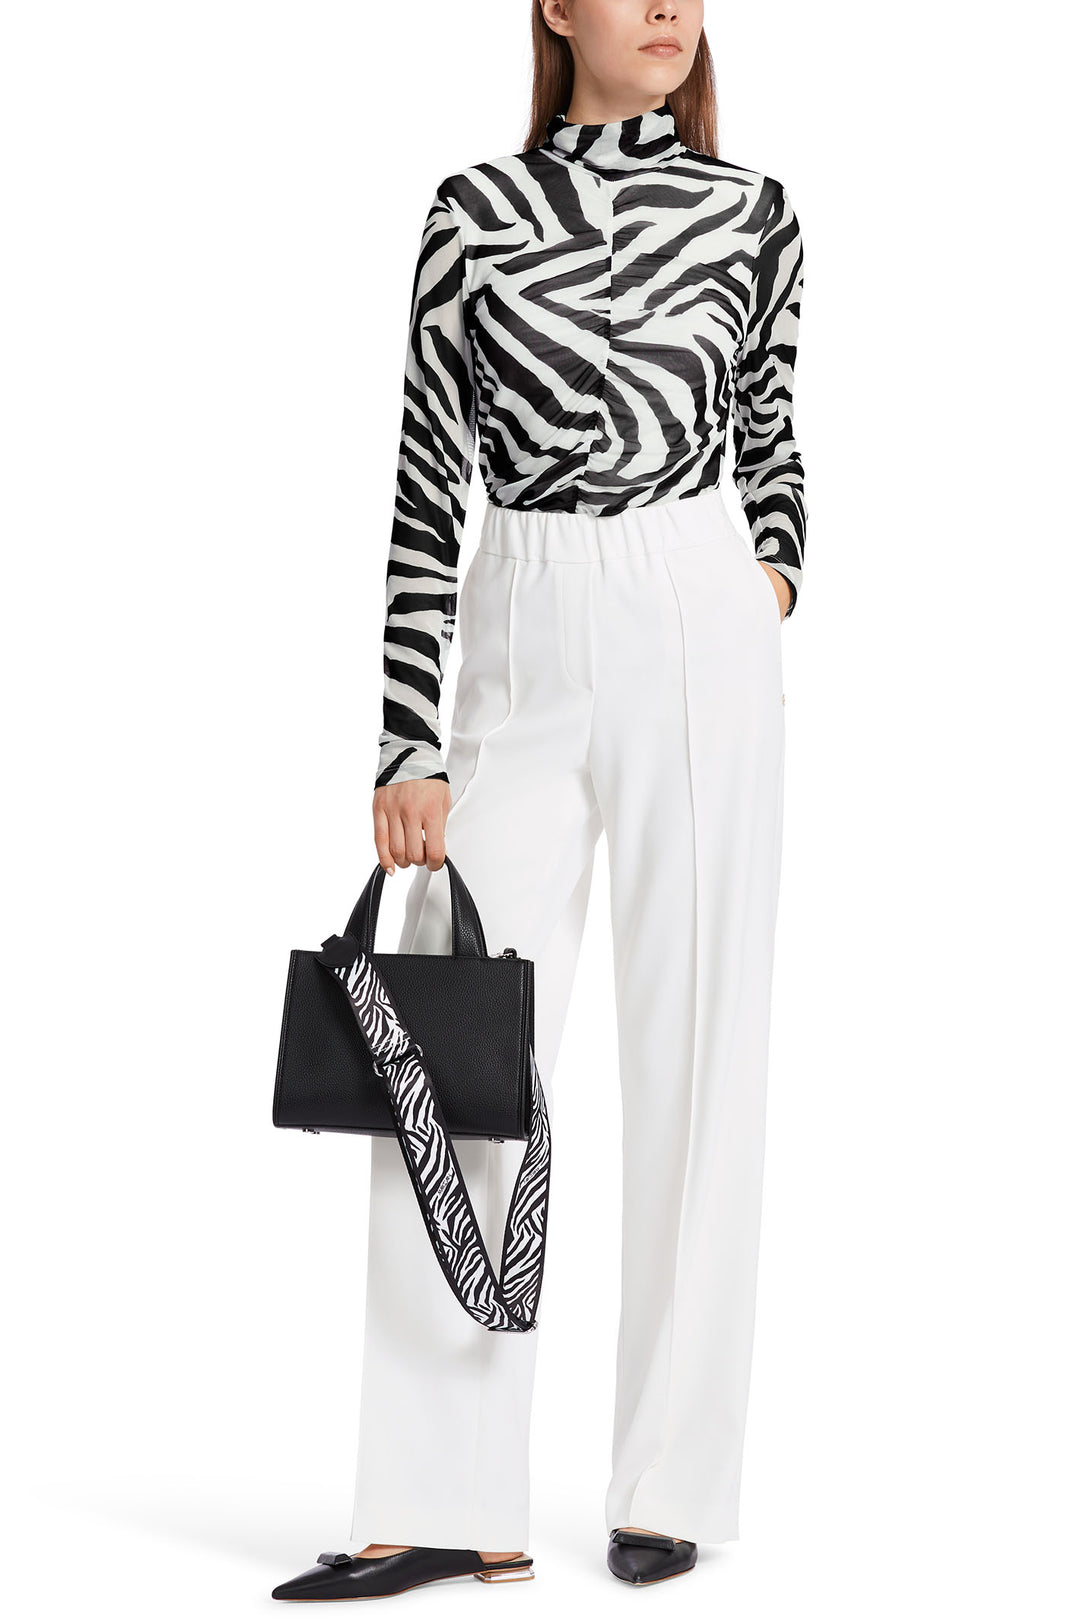 Marc Cain 48.13 J12 Black White Zebra Animal Print Mesh Roll Neck Top - Olivia Grace Fashion